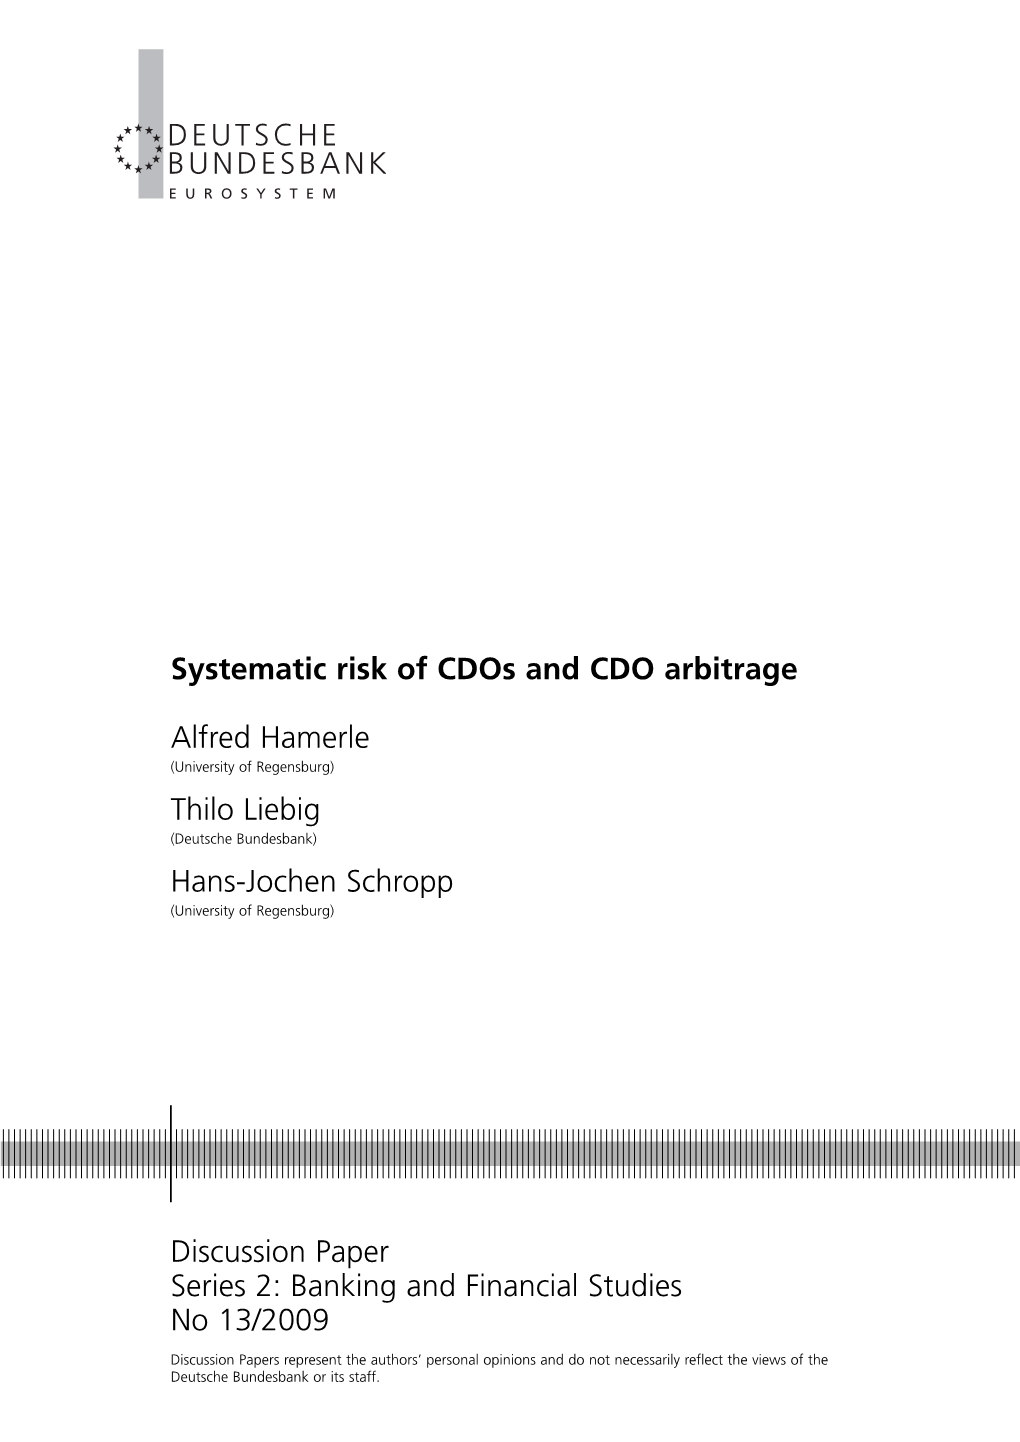 Systematic Risk of Cdos and CDO Arbitrage